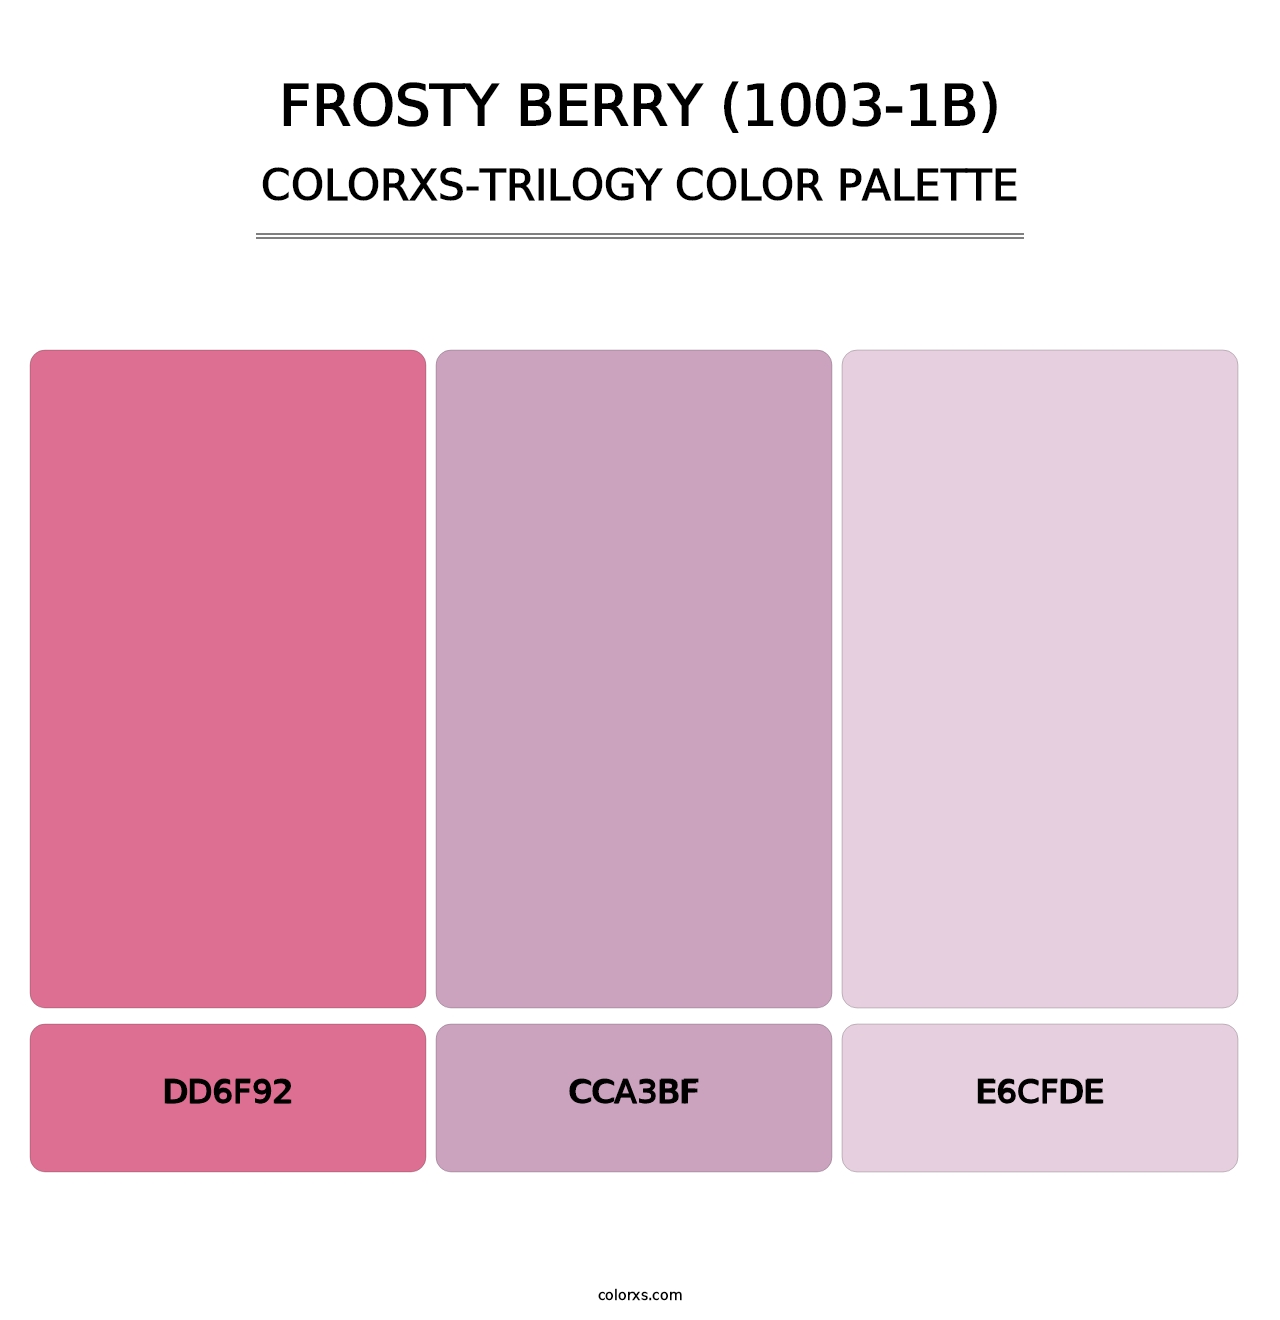 Frosty Berry (1003-1B) - Colorxs Trilogy Palette